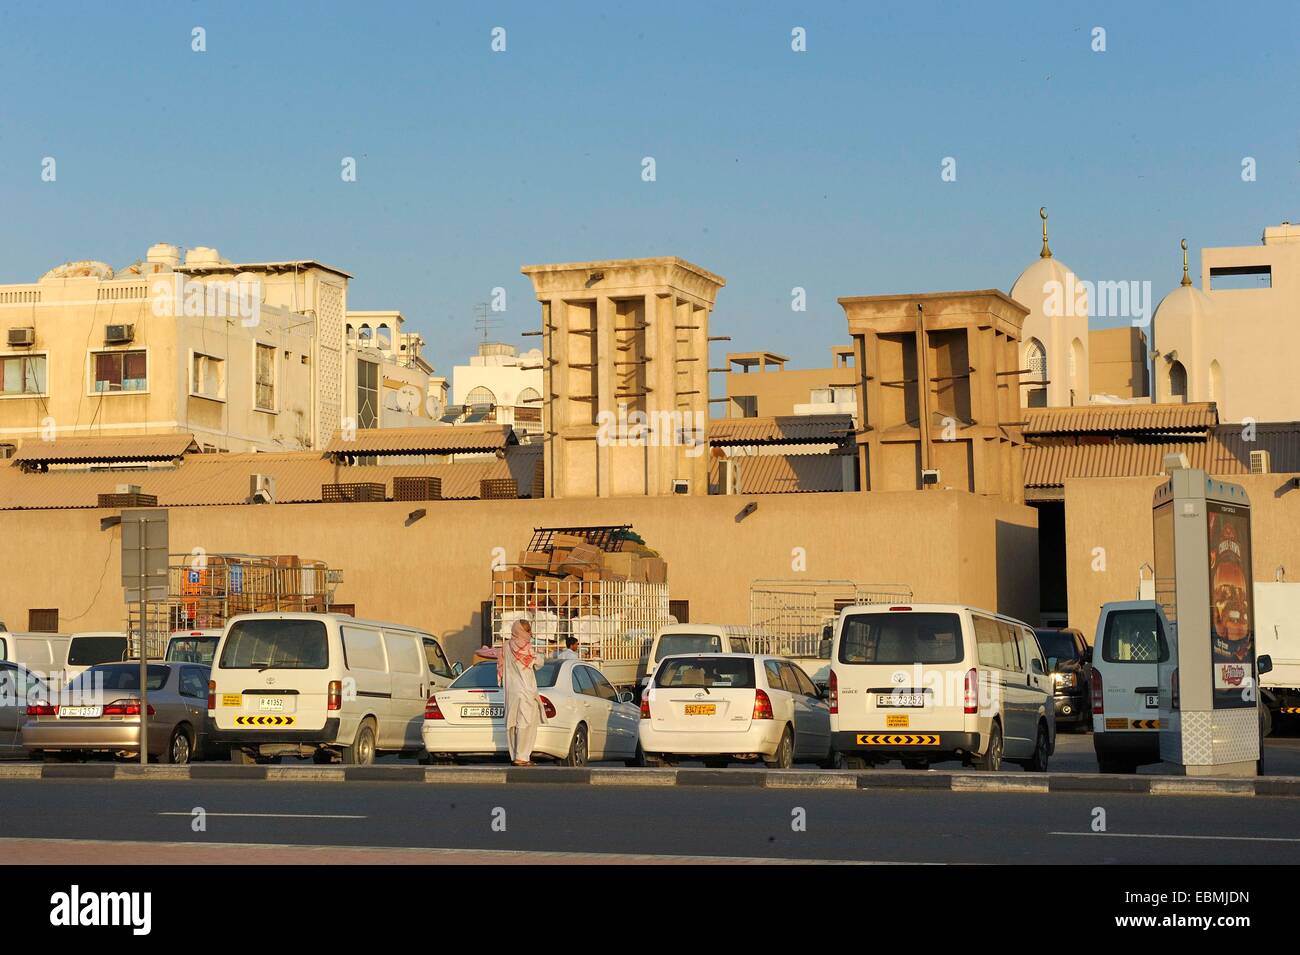 Street scene with wind towers or Badgir, Daira, Dubai, Emirate of Dubai, United Arab Emirates Stock Photo